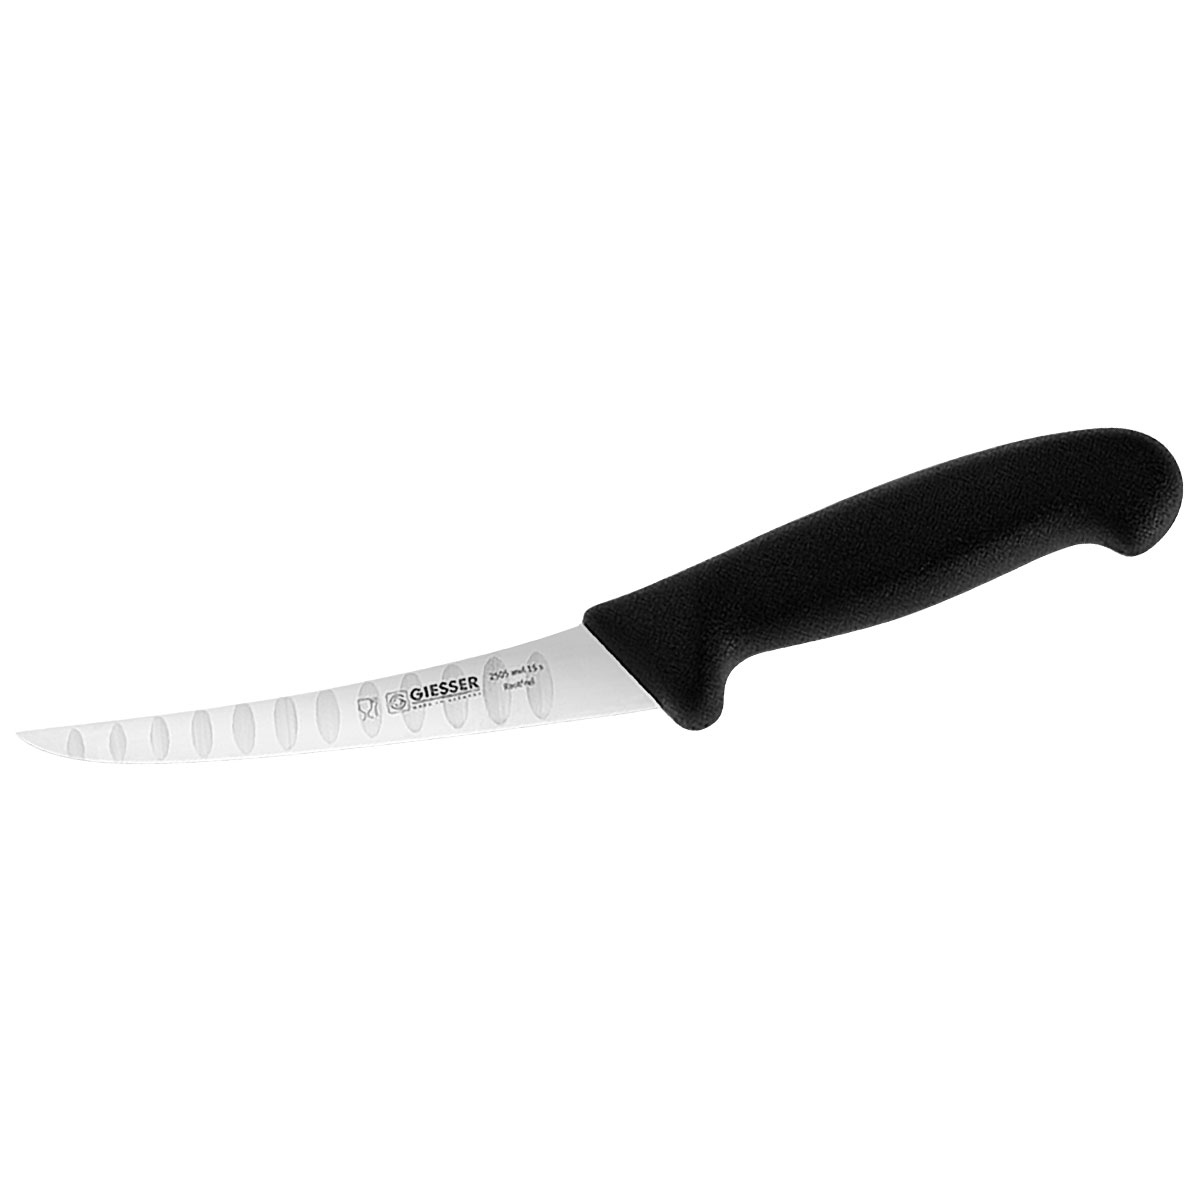 Giesser Boning Knife, 15cm (6) - Curved, Narrow, Semi-Flexible, Fluted Blade - Black